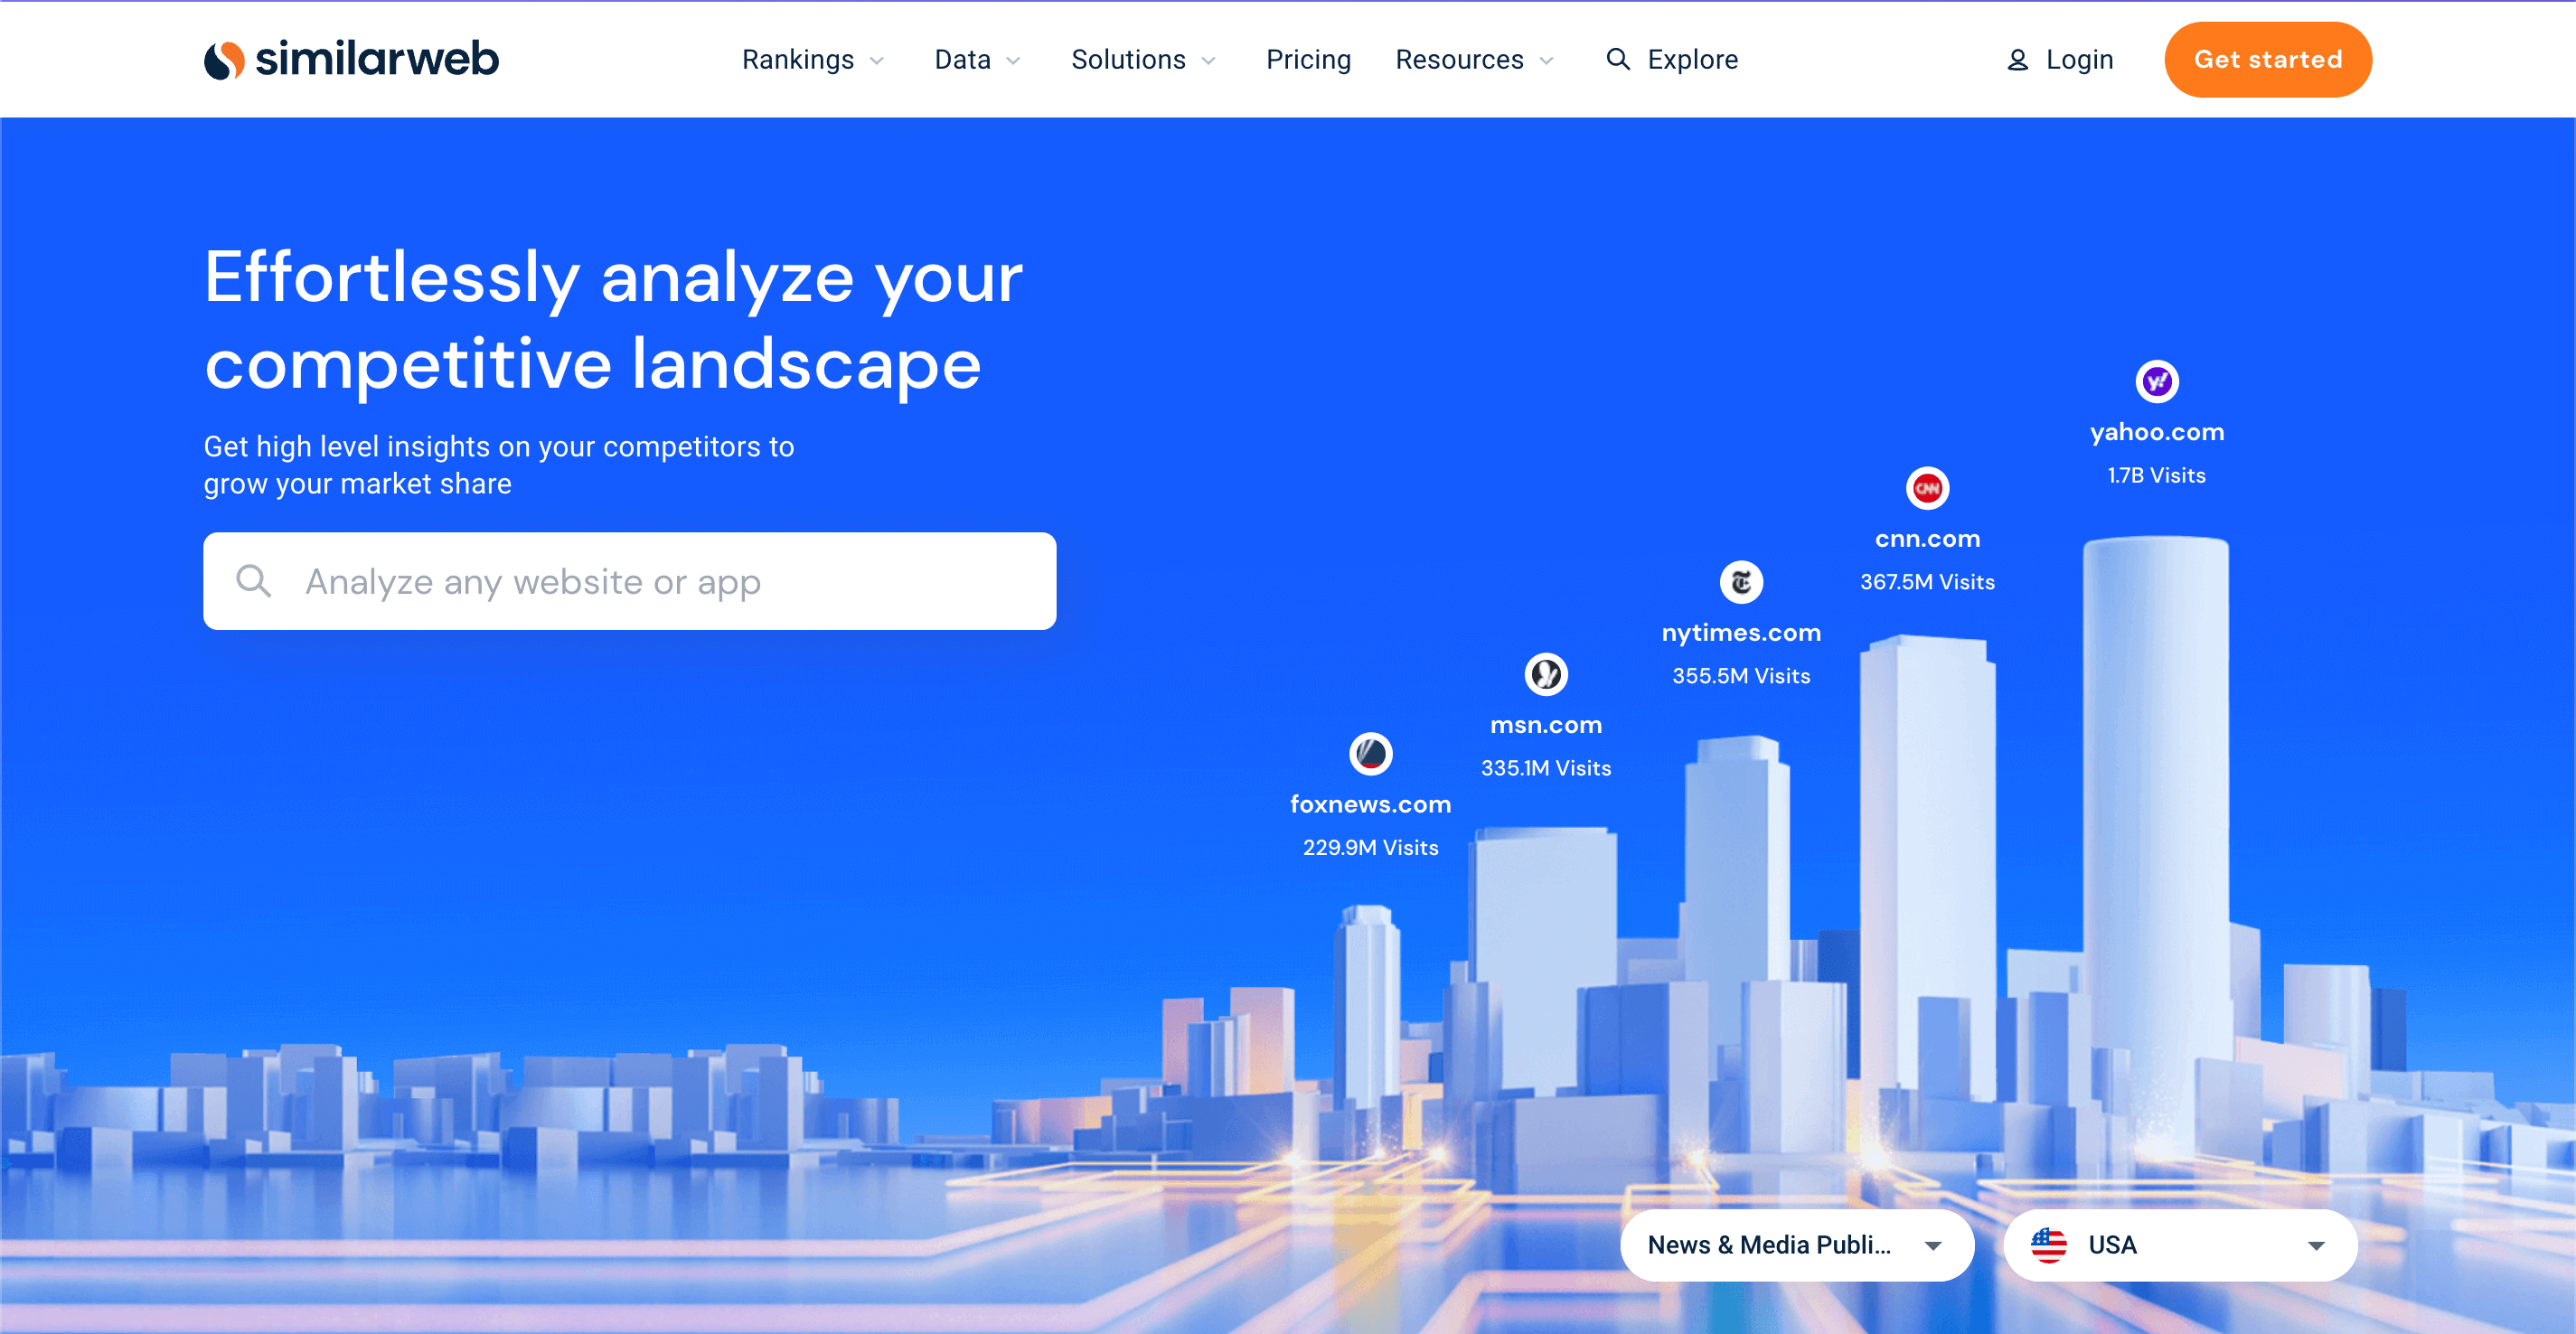 SimilarWeb's homepage